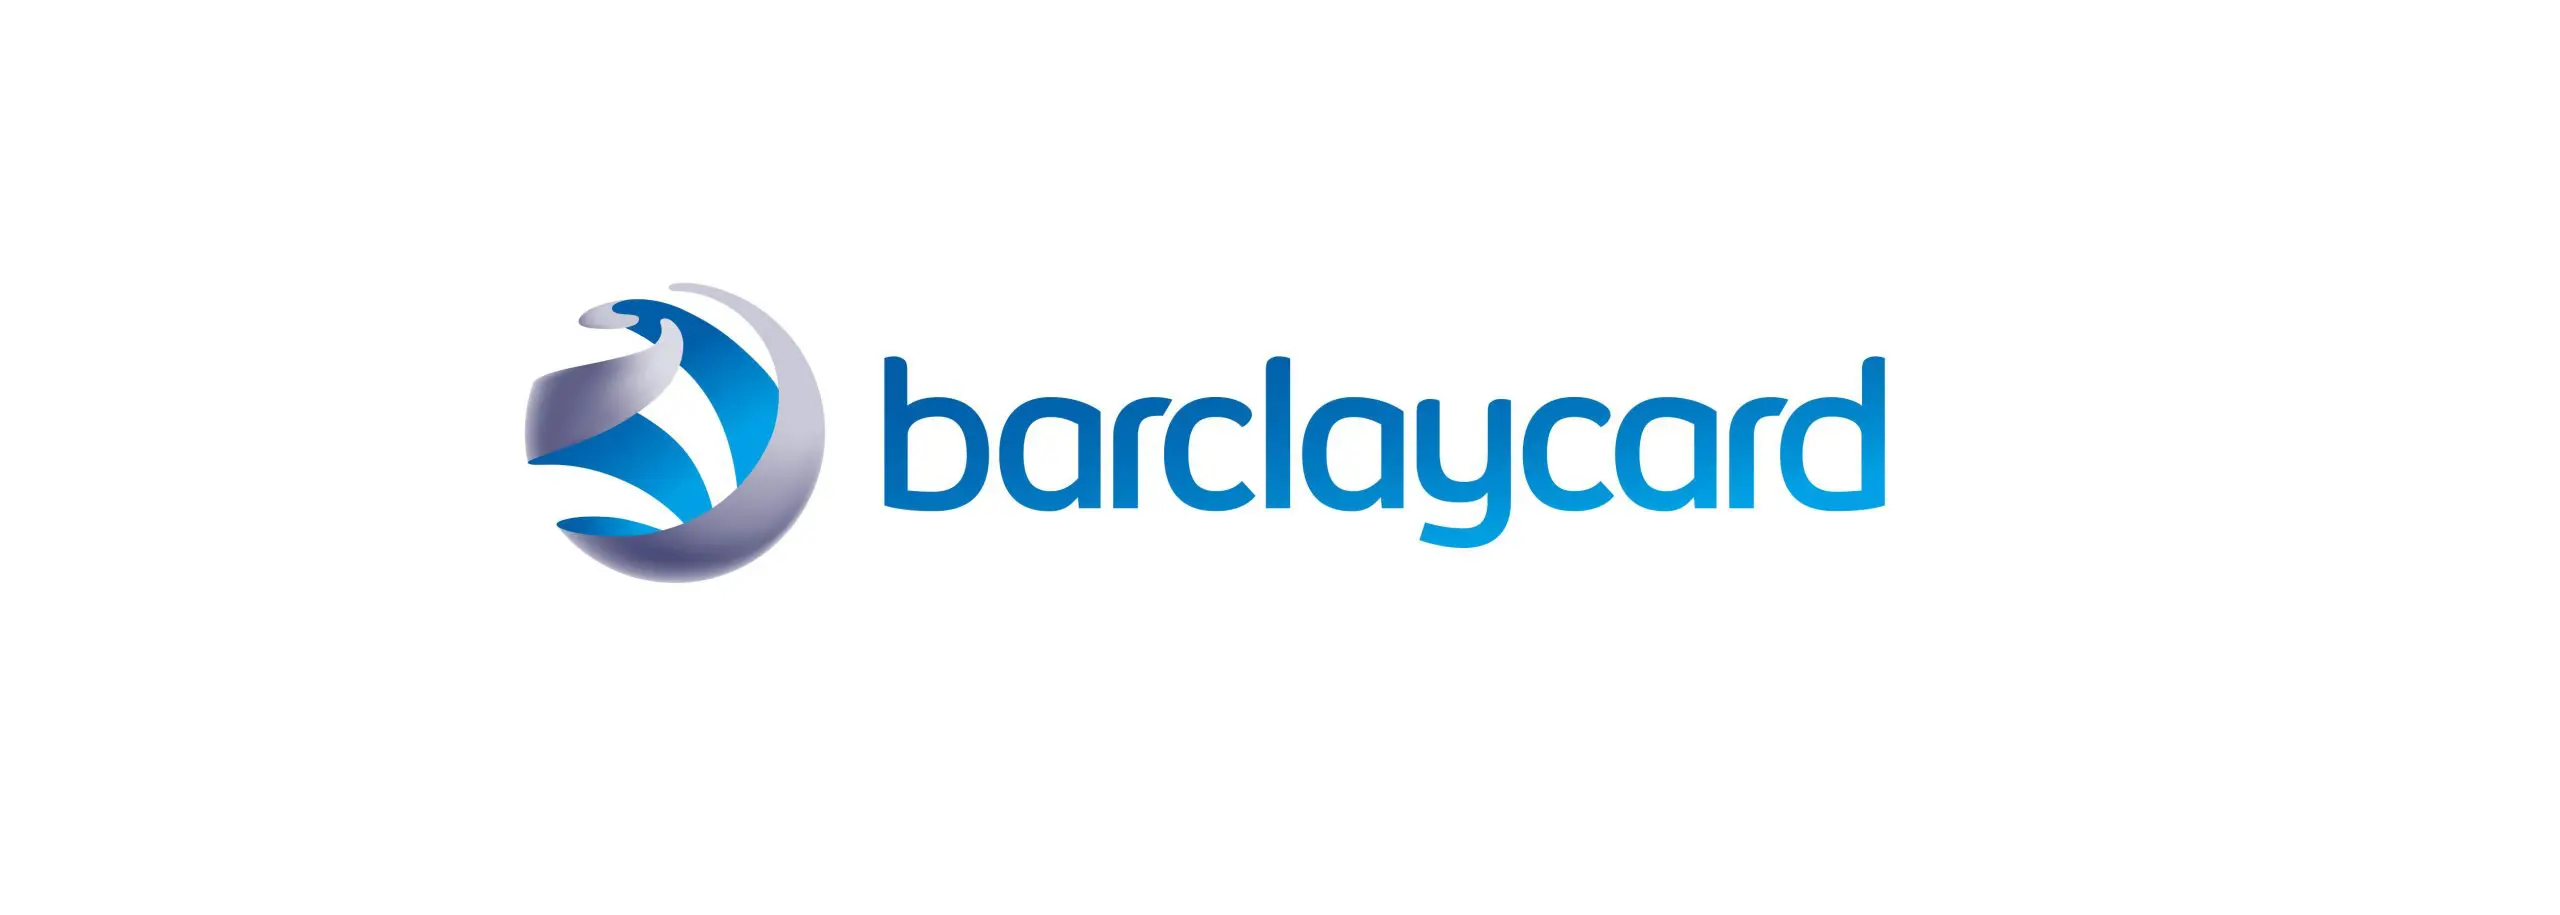 Magento 2 payment gateways: Barclaycard